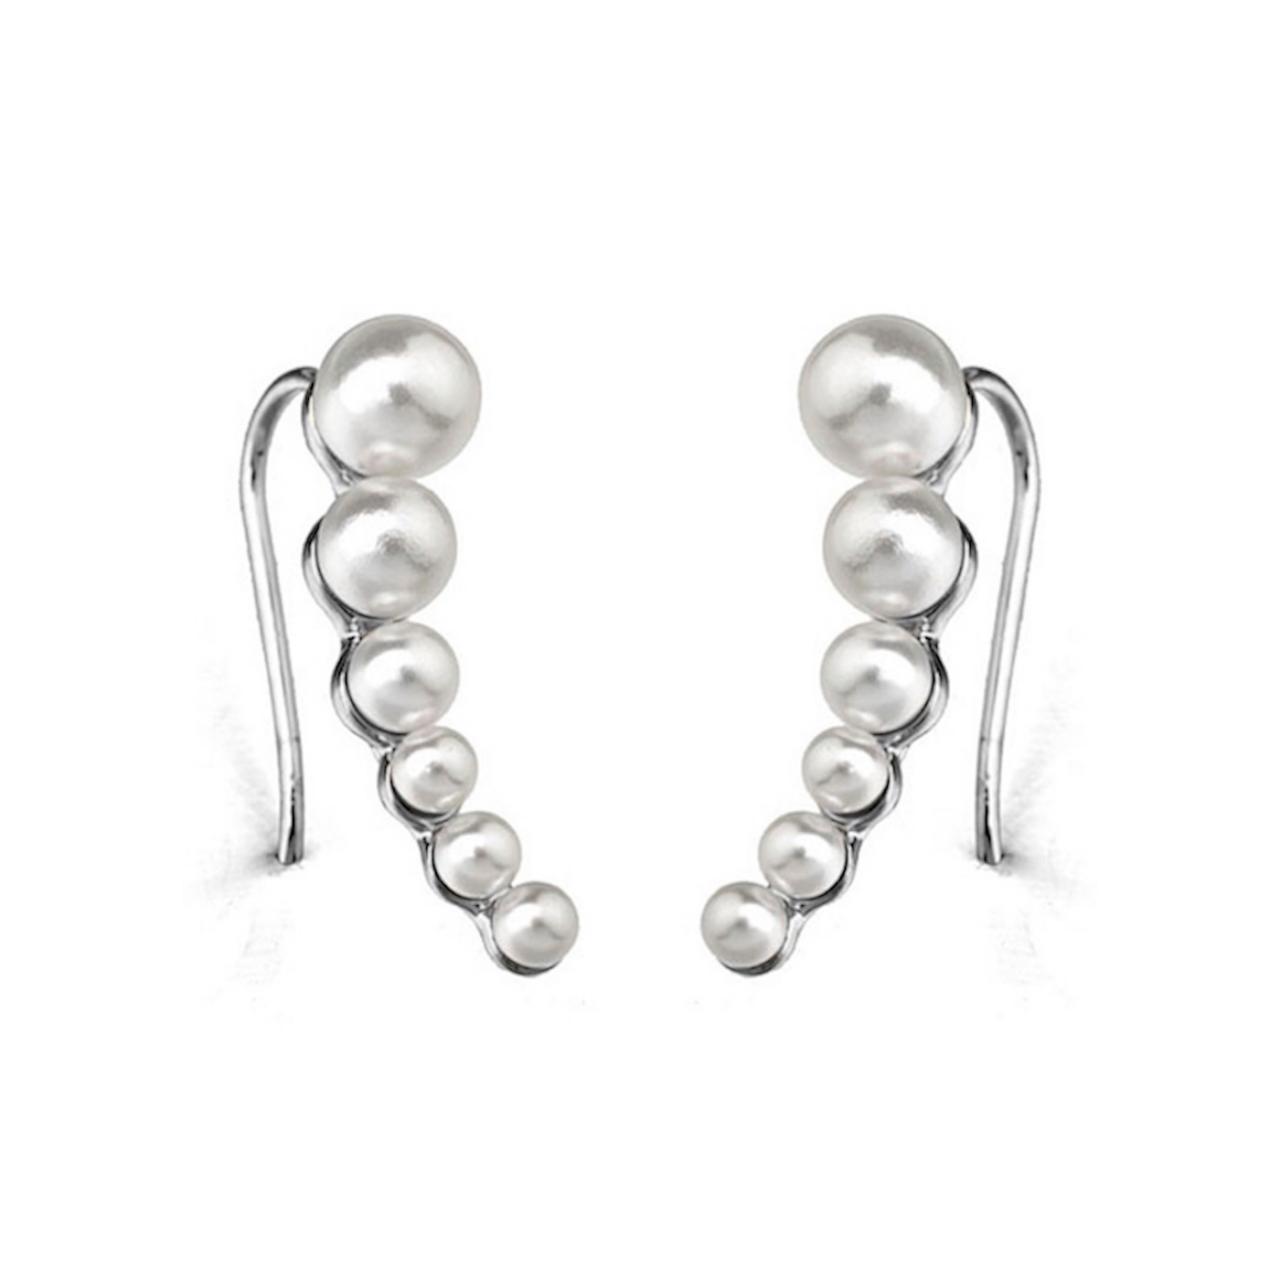 Pearl Earrings / Crawler Earrings / Silver Earrings / Classy Jewelry / Mini Pearls / Ear Crawler Earrings / Ear Crawler / Climber Earrings